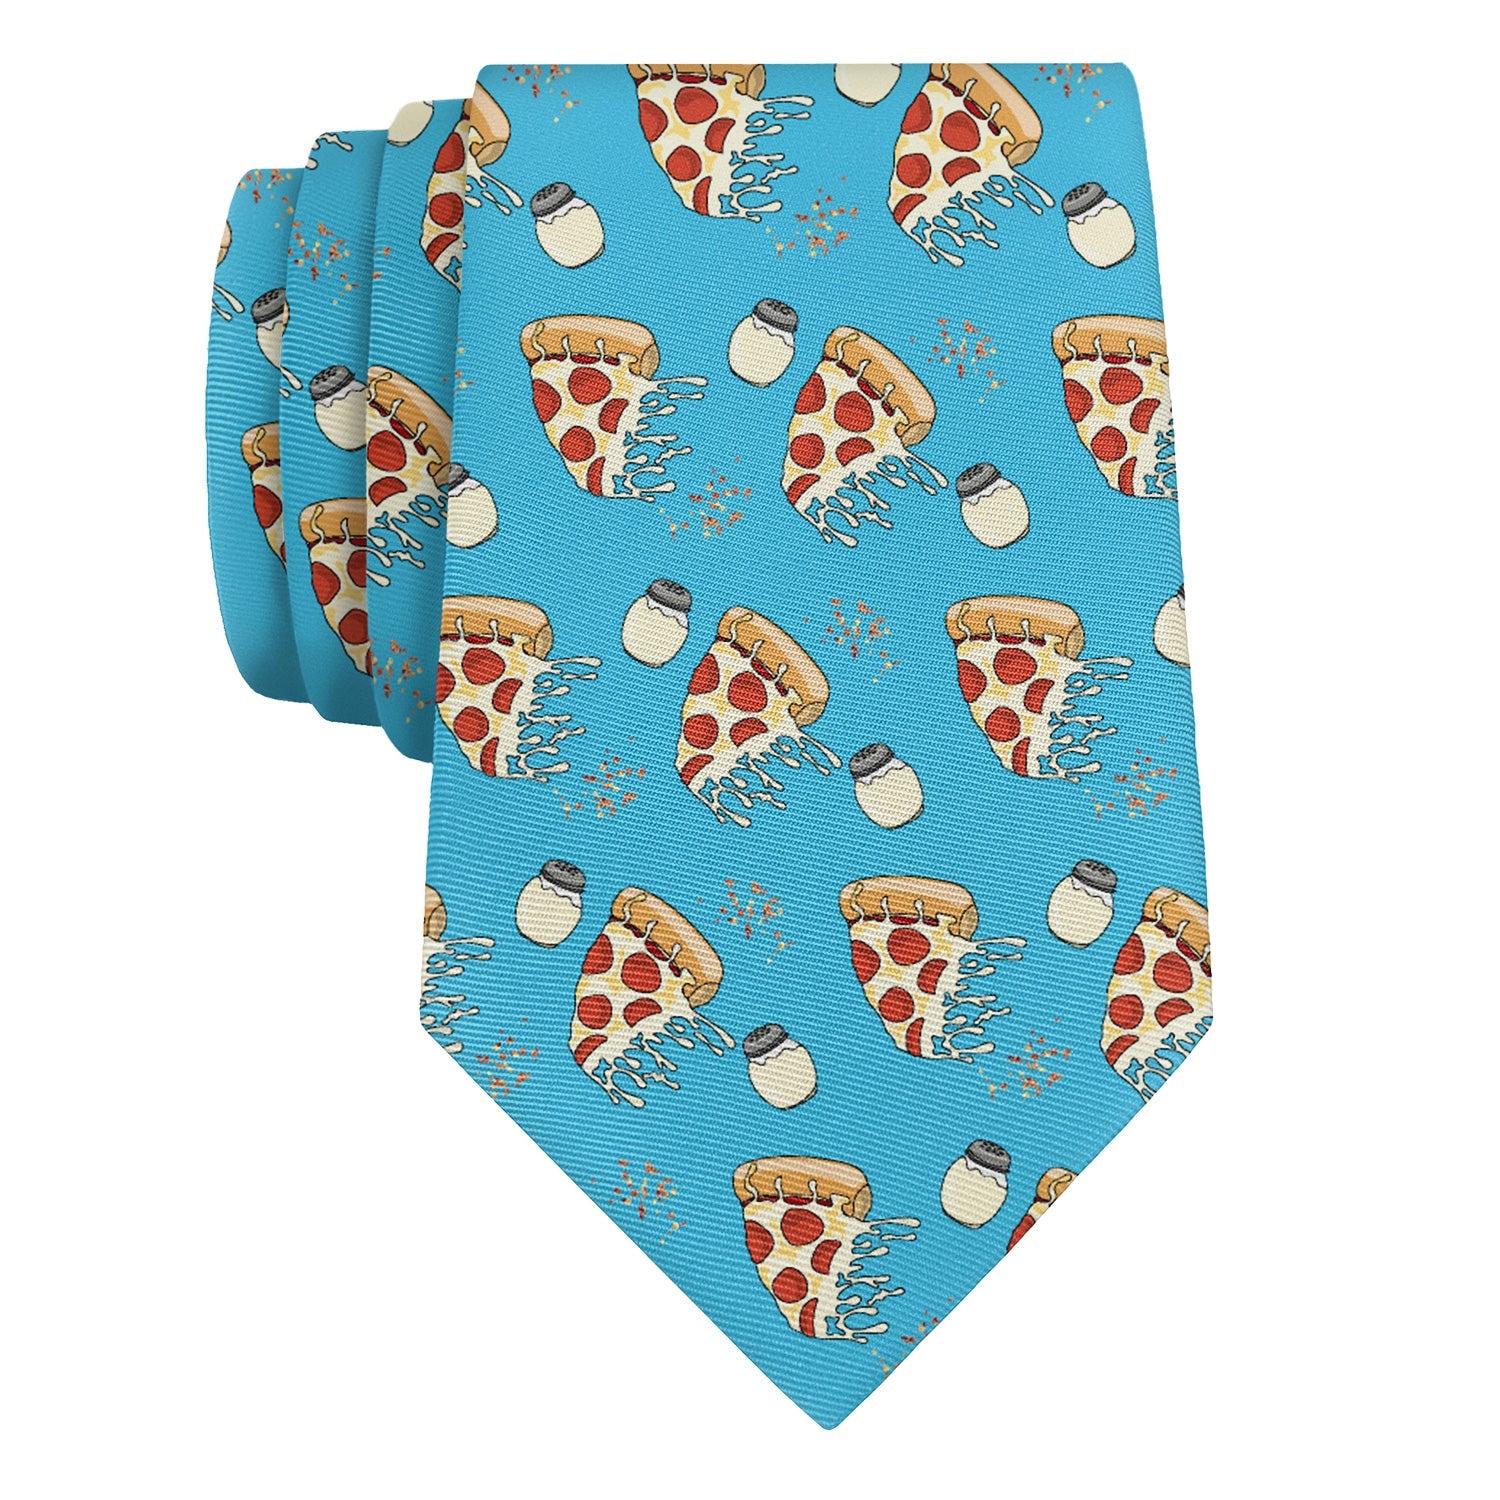 Pizza Party Necktie - Knotty 2.75" -  - Knotty Tie Co.